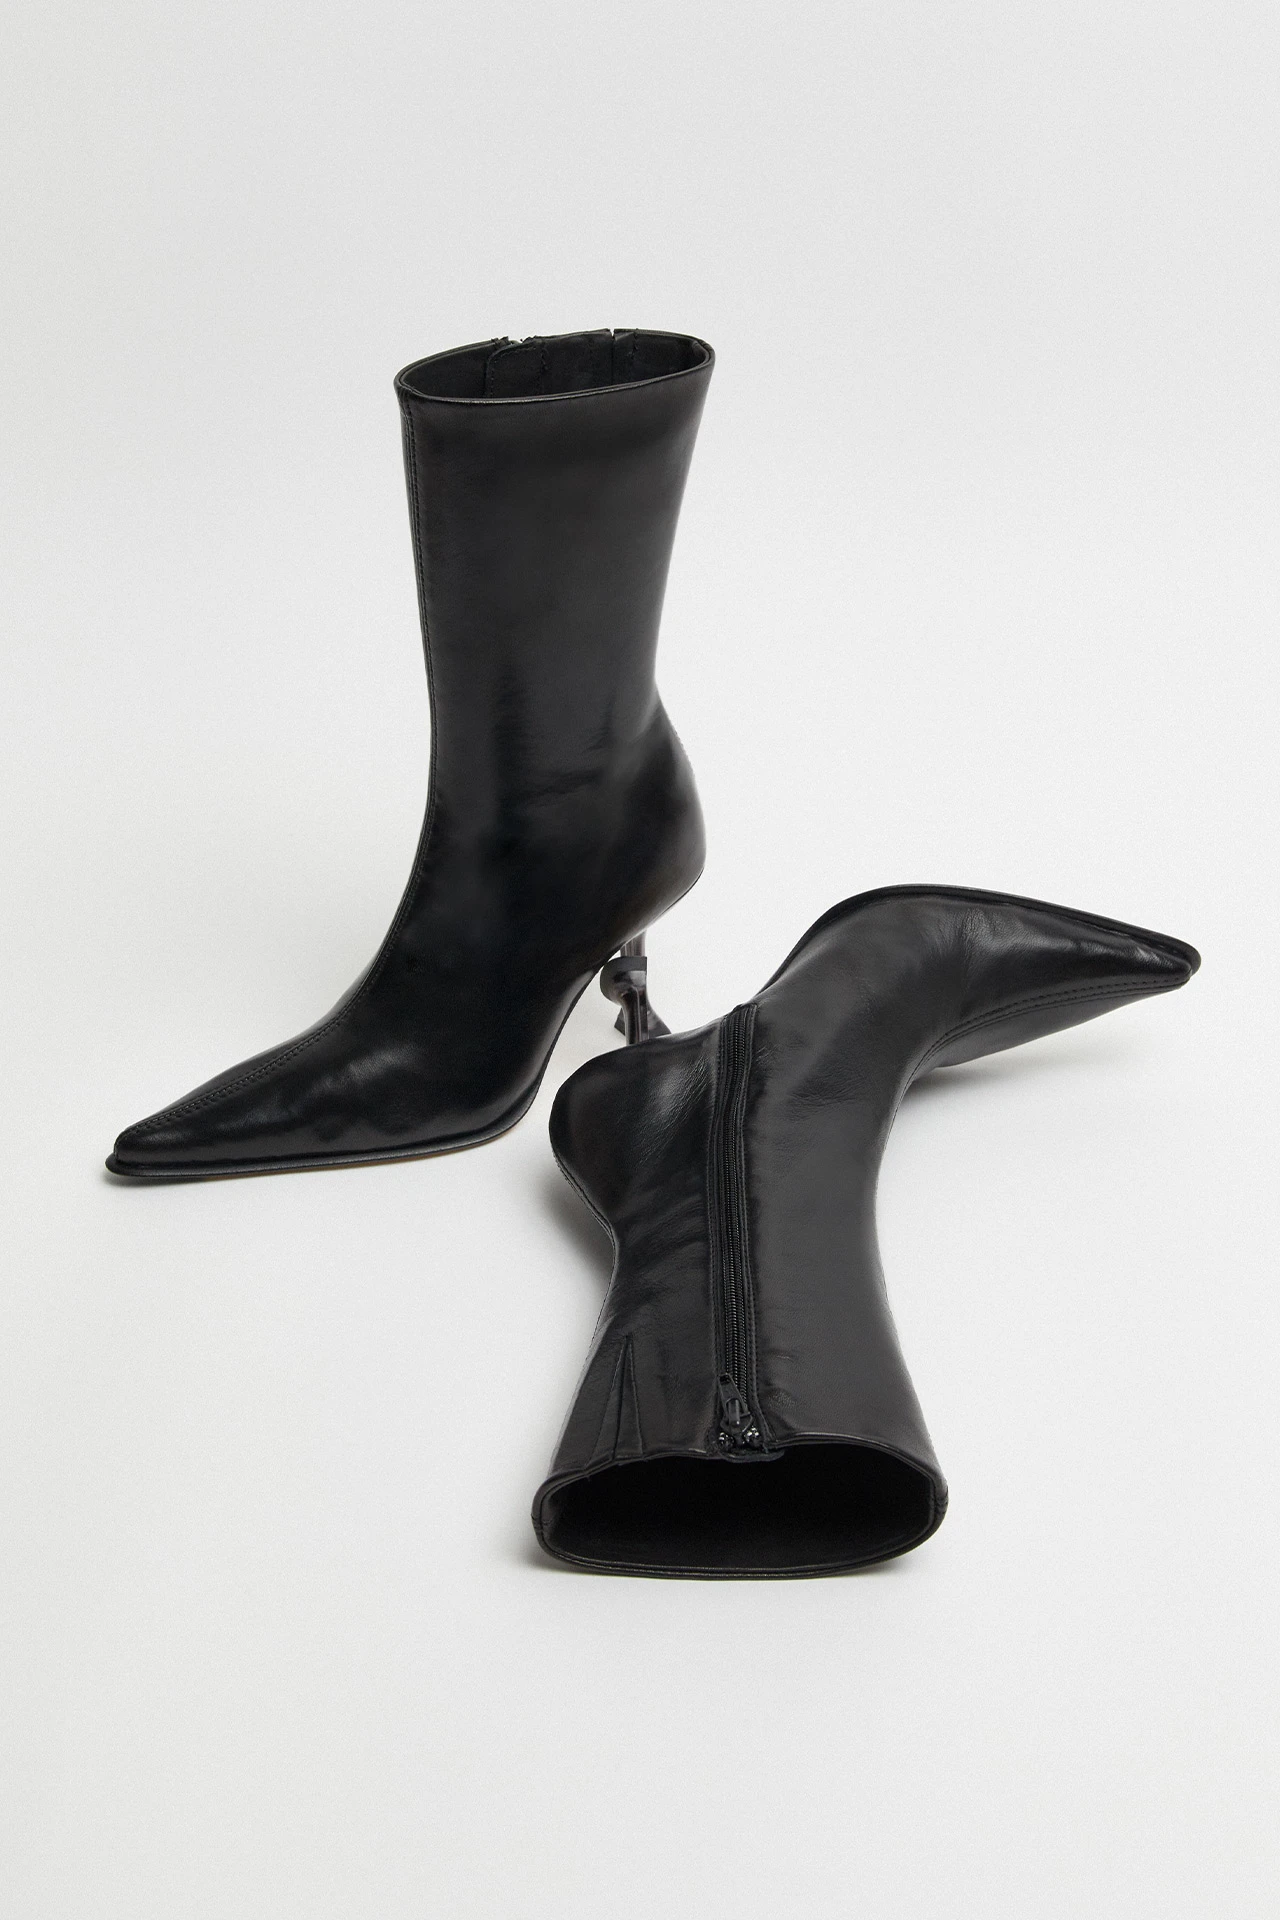 Miista-marcela-black-boots-02